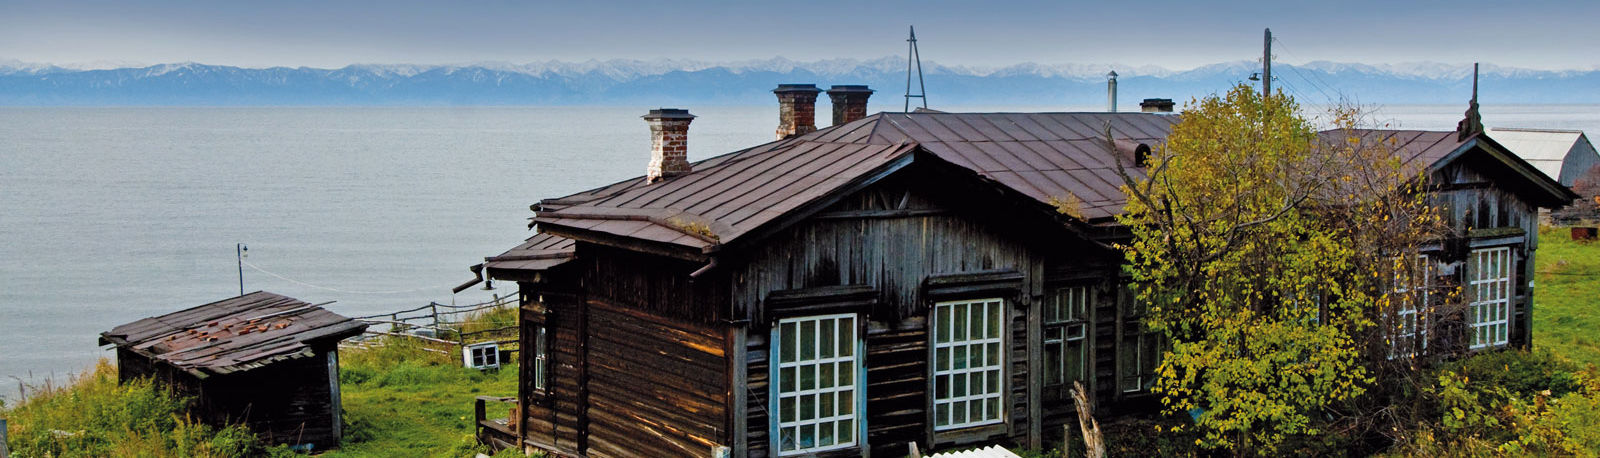 Holzhütten am Baikalsee